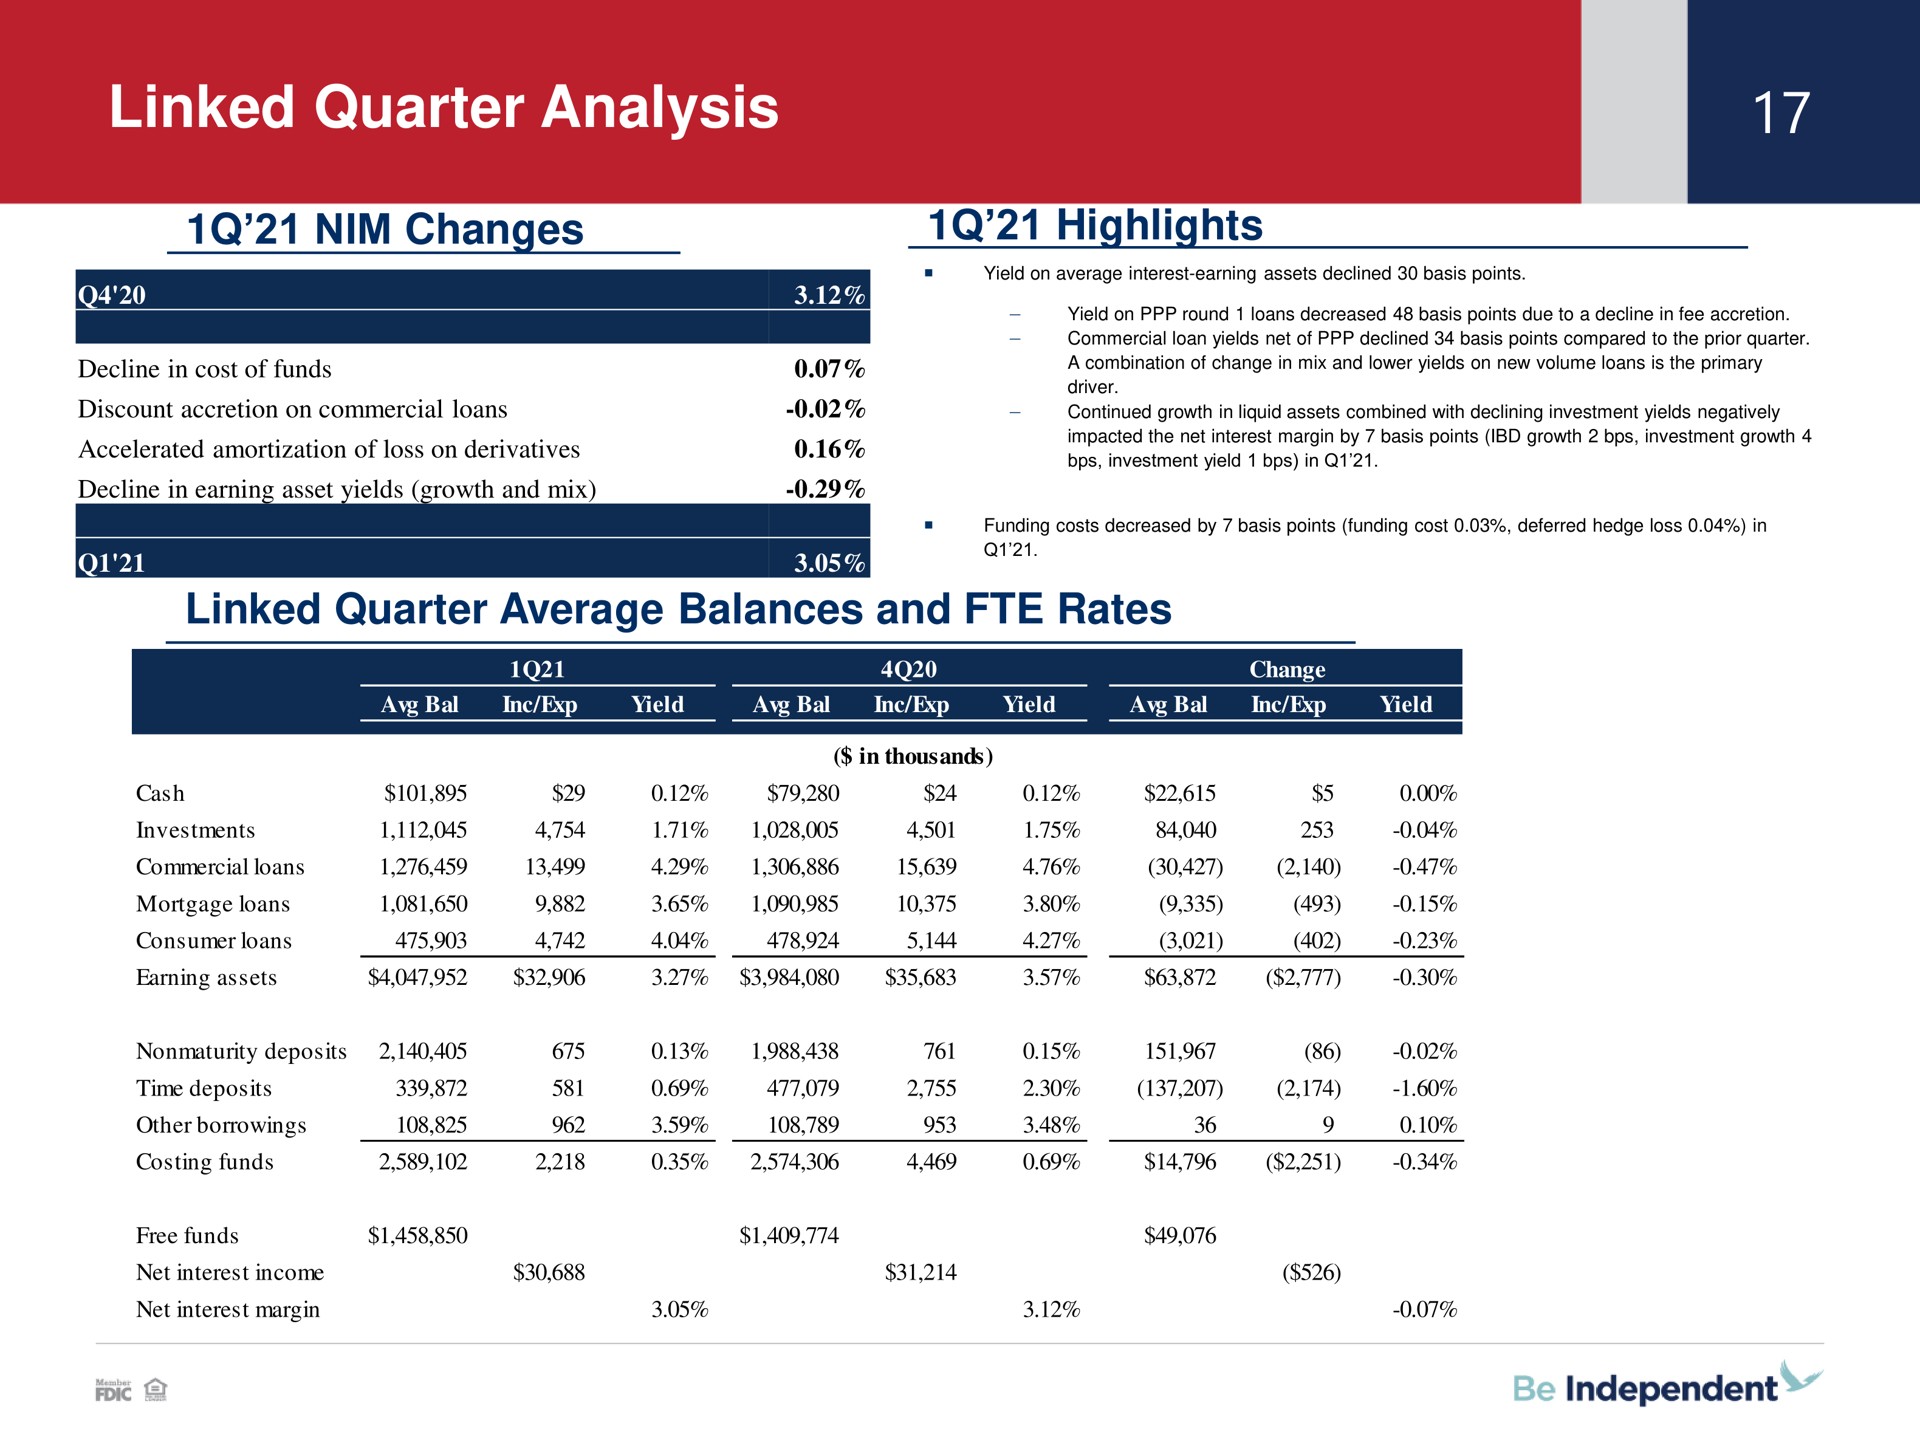 linked quarter analysis highlights average balances and rates | Independent Bank Corp